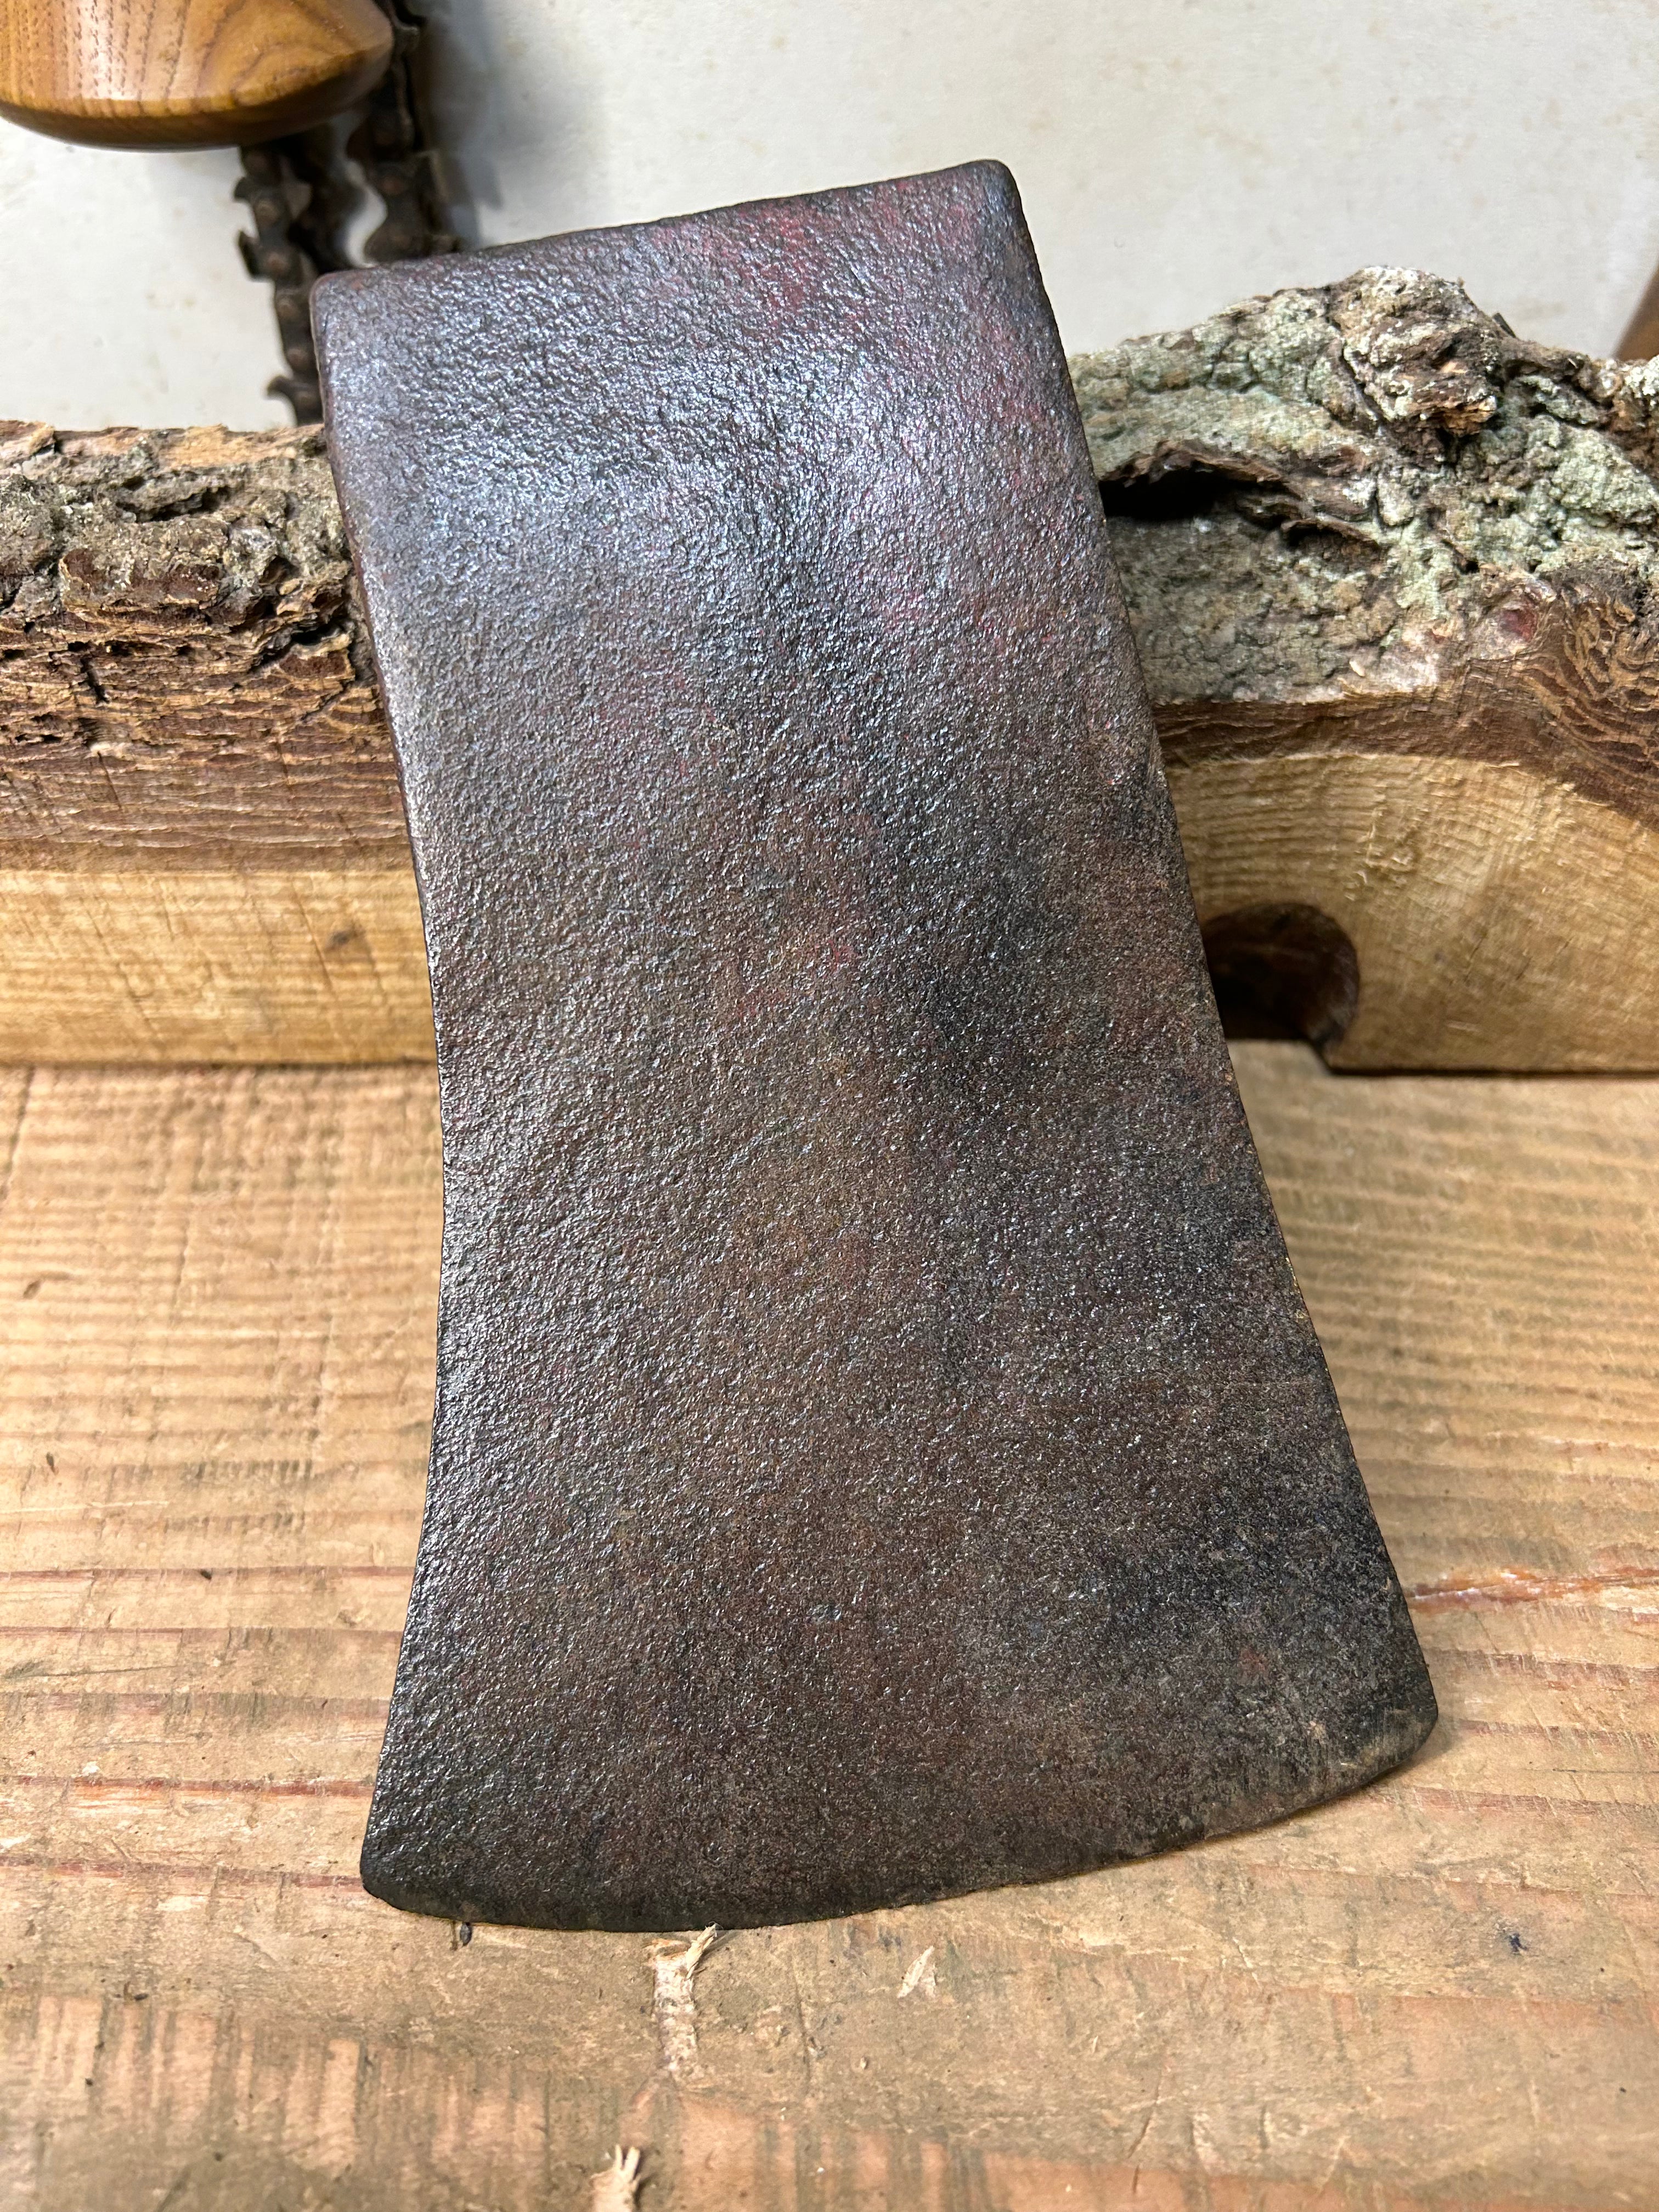 Vintage Kelly Woodslasher 3.5lb Dayton pattern axe head - 0